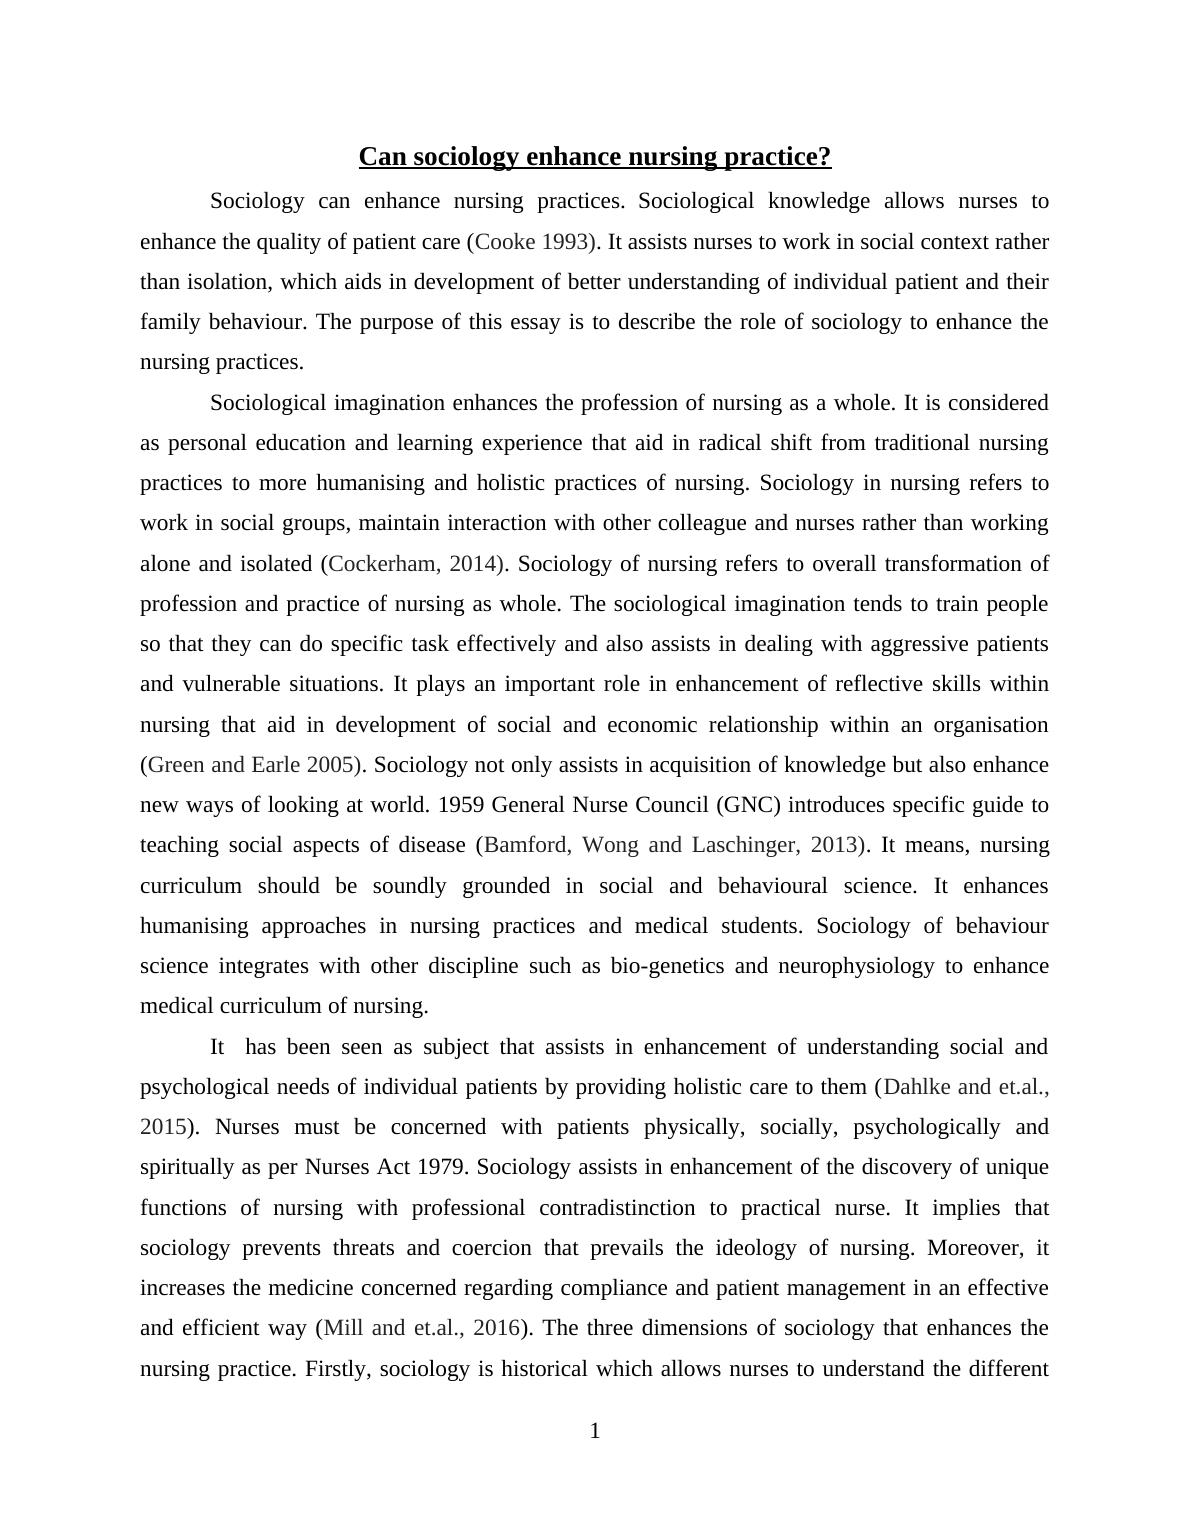 Essay on Sociology Enhance Nursing Practice_2